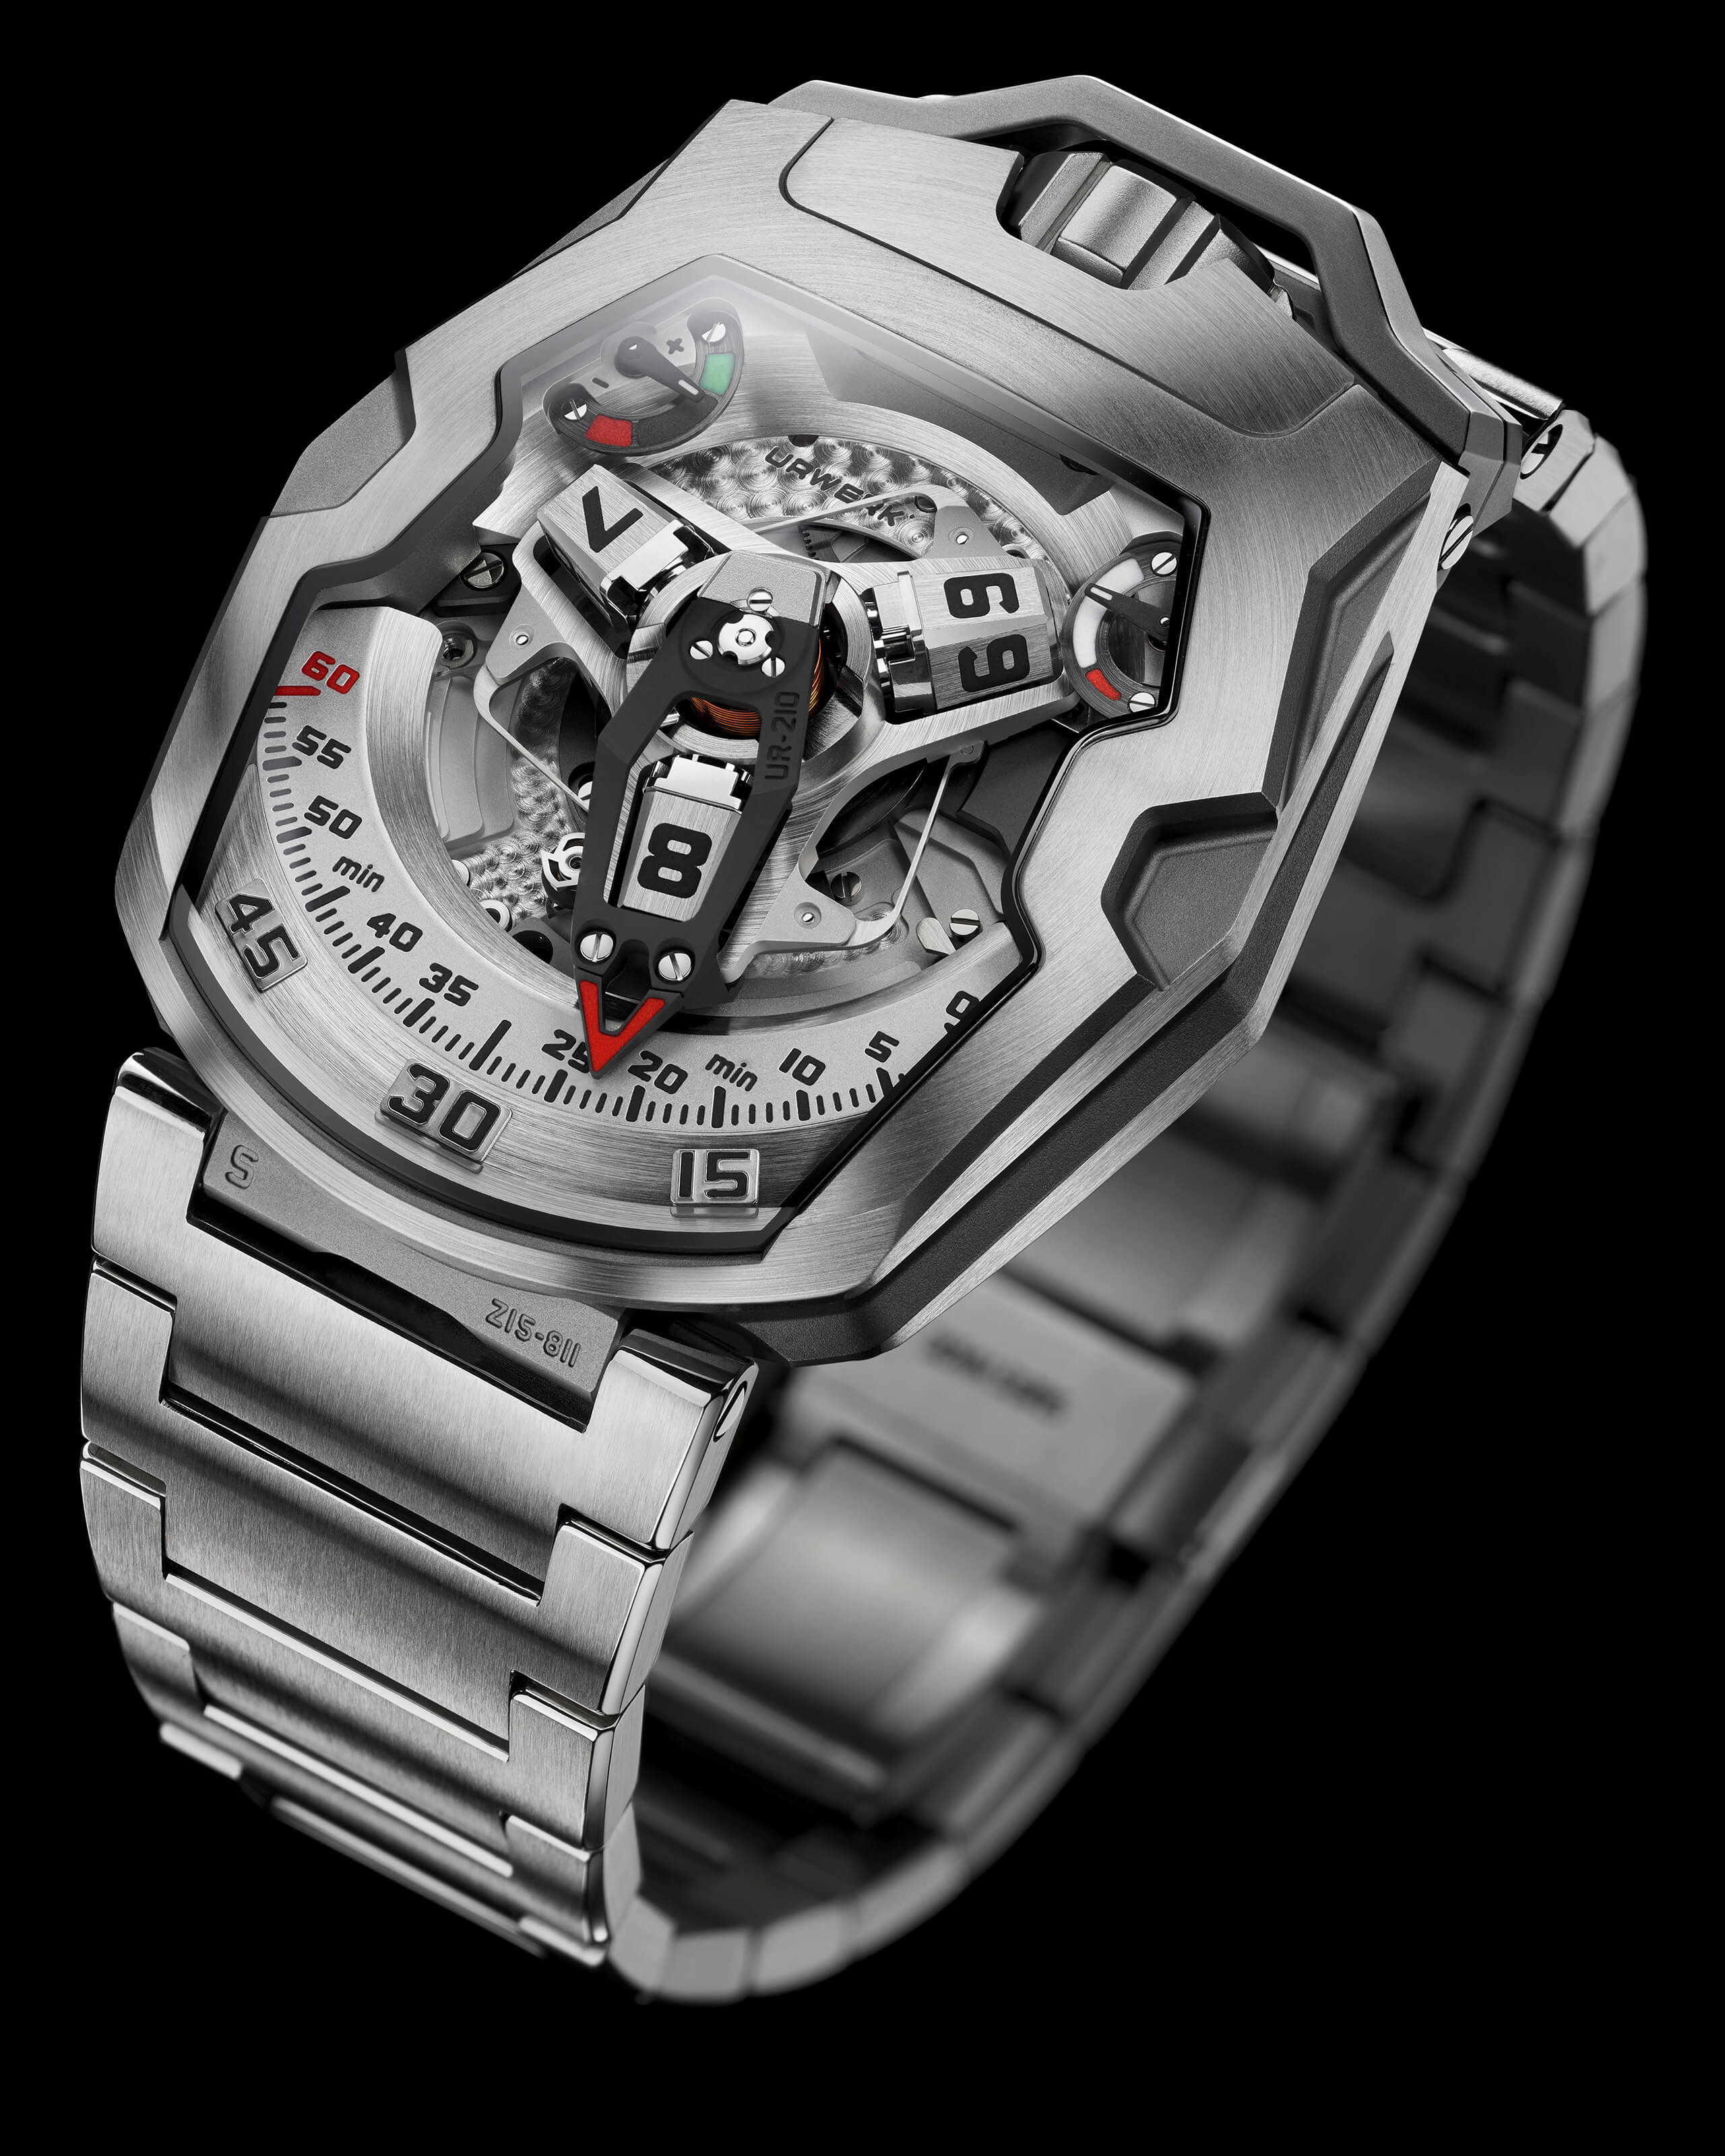 UR-210 special watch | URWERK, Swiss watchmakers